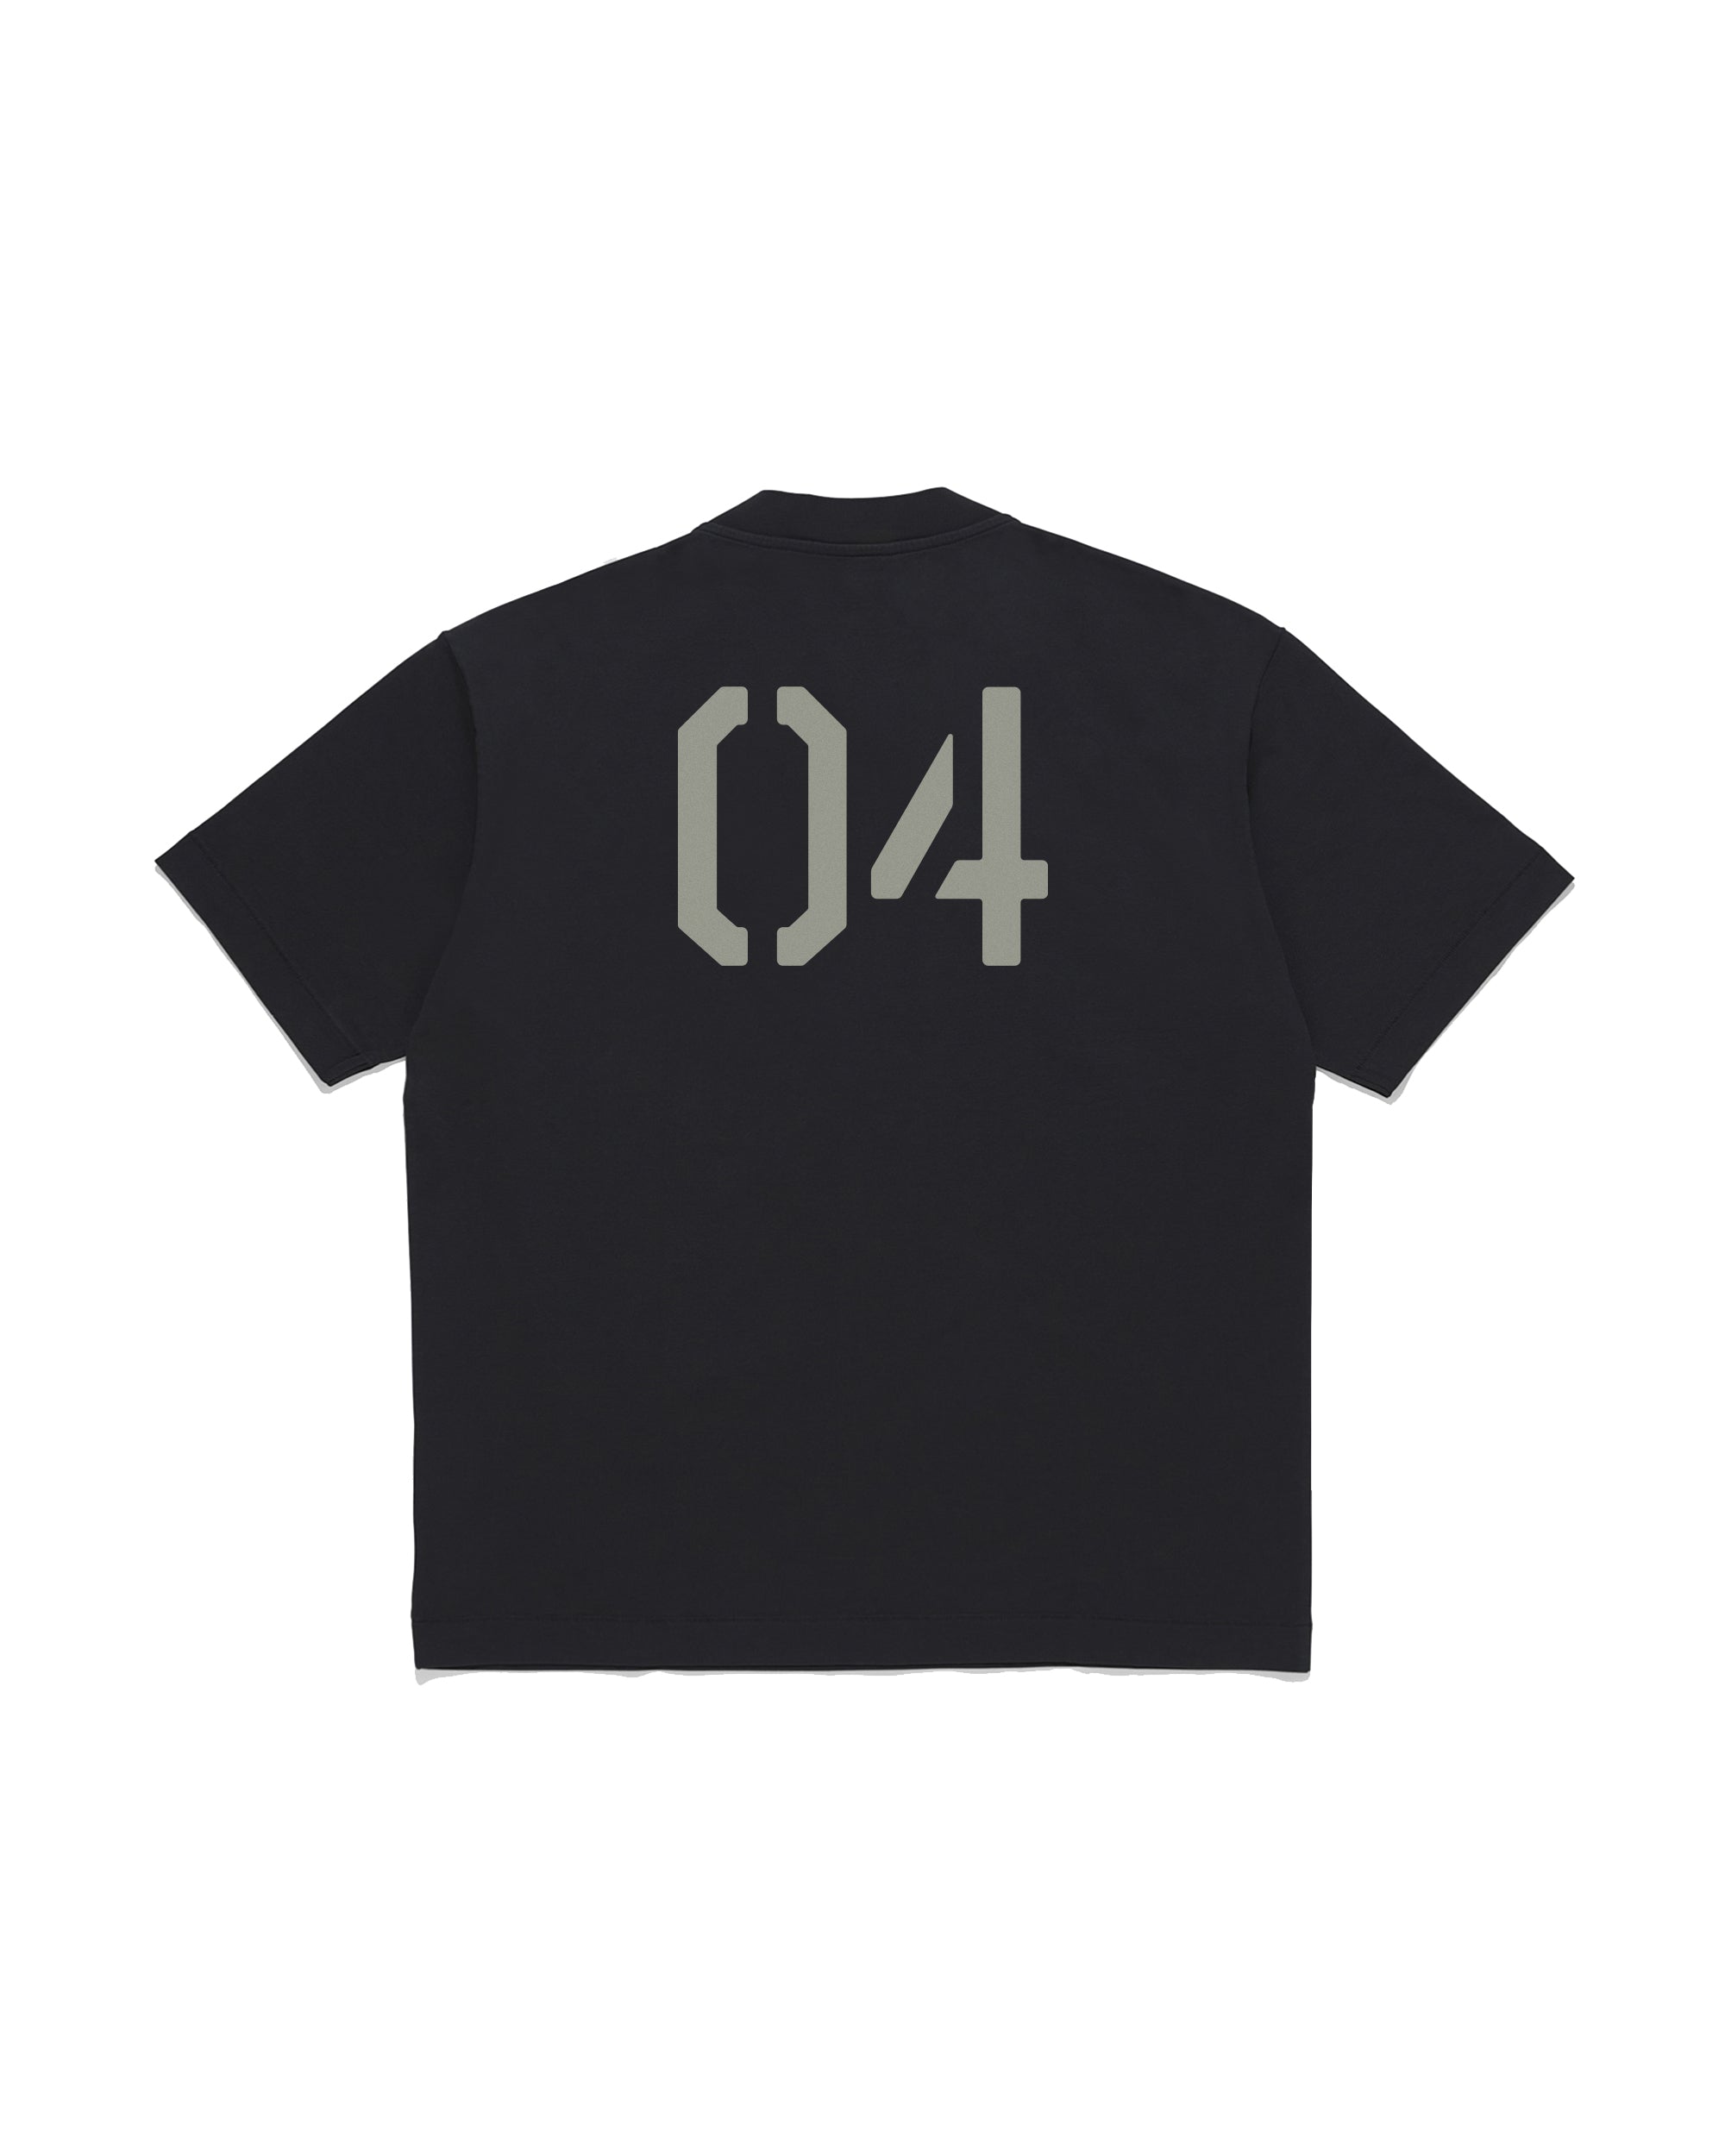 Season 04 T-Shirt - Black